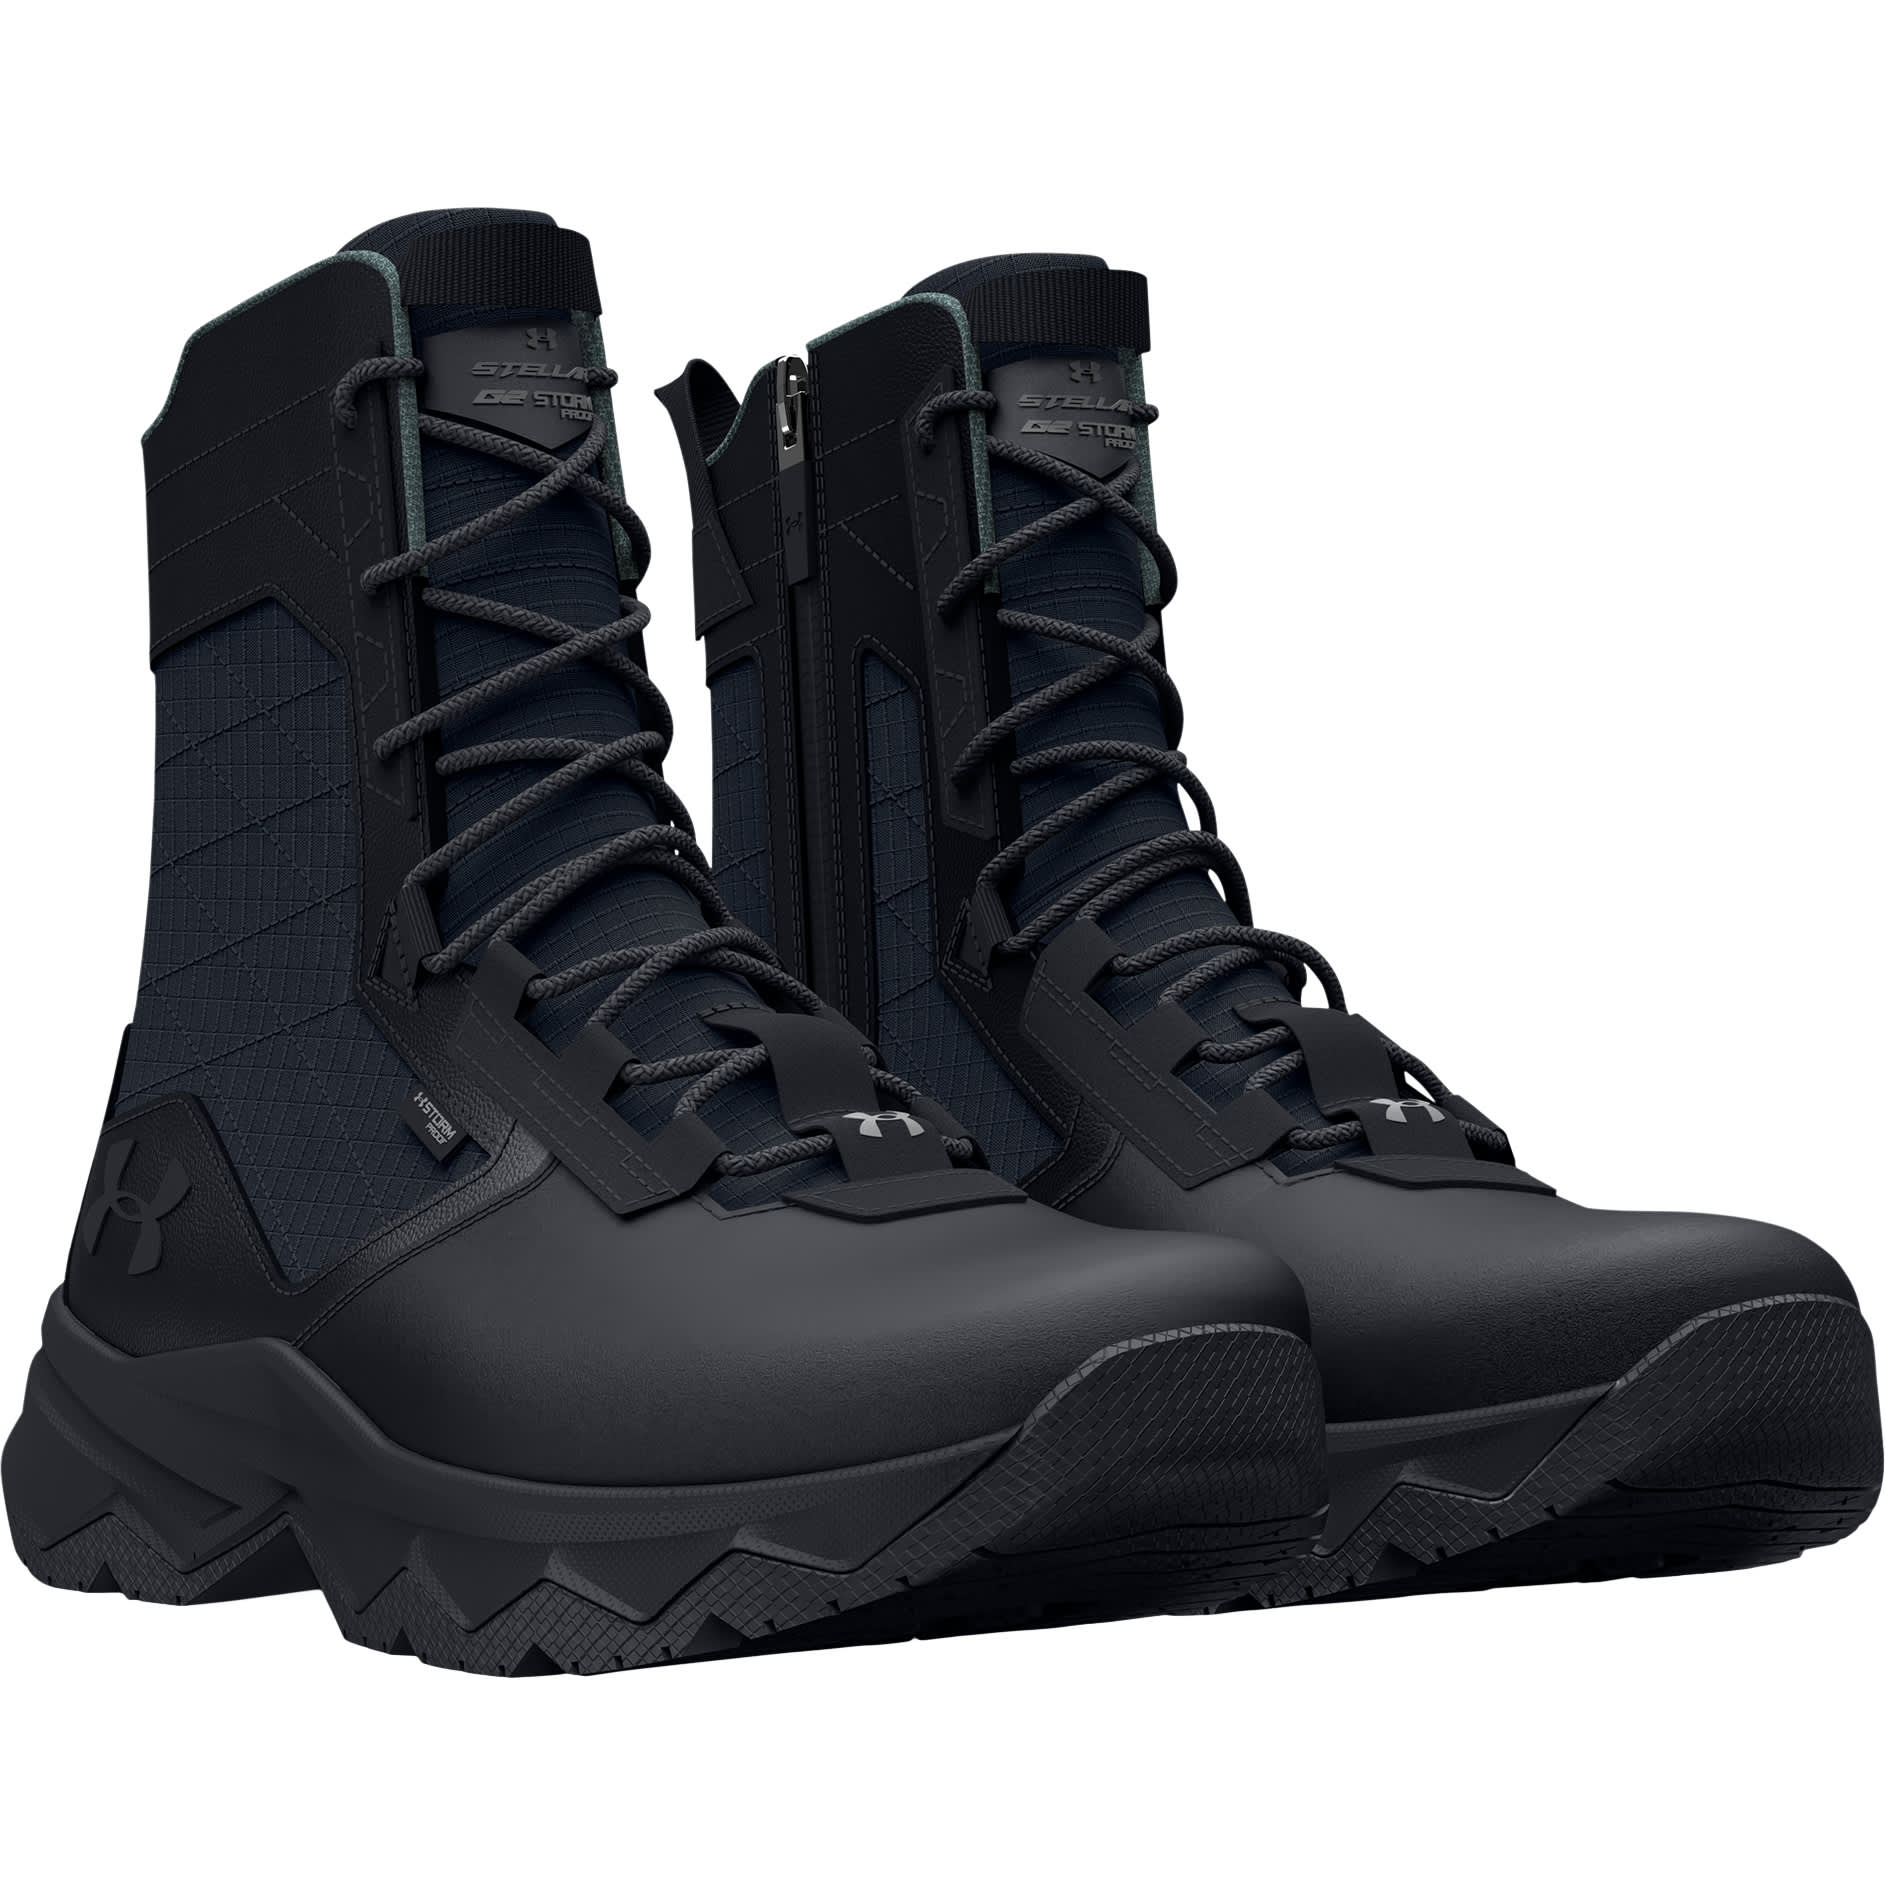 Under Armour® Men’s Stellar G2 Waterproof Zip Tactical Boots